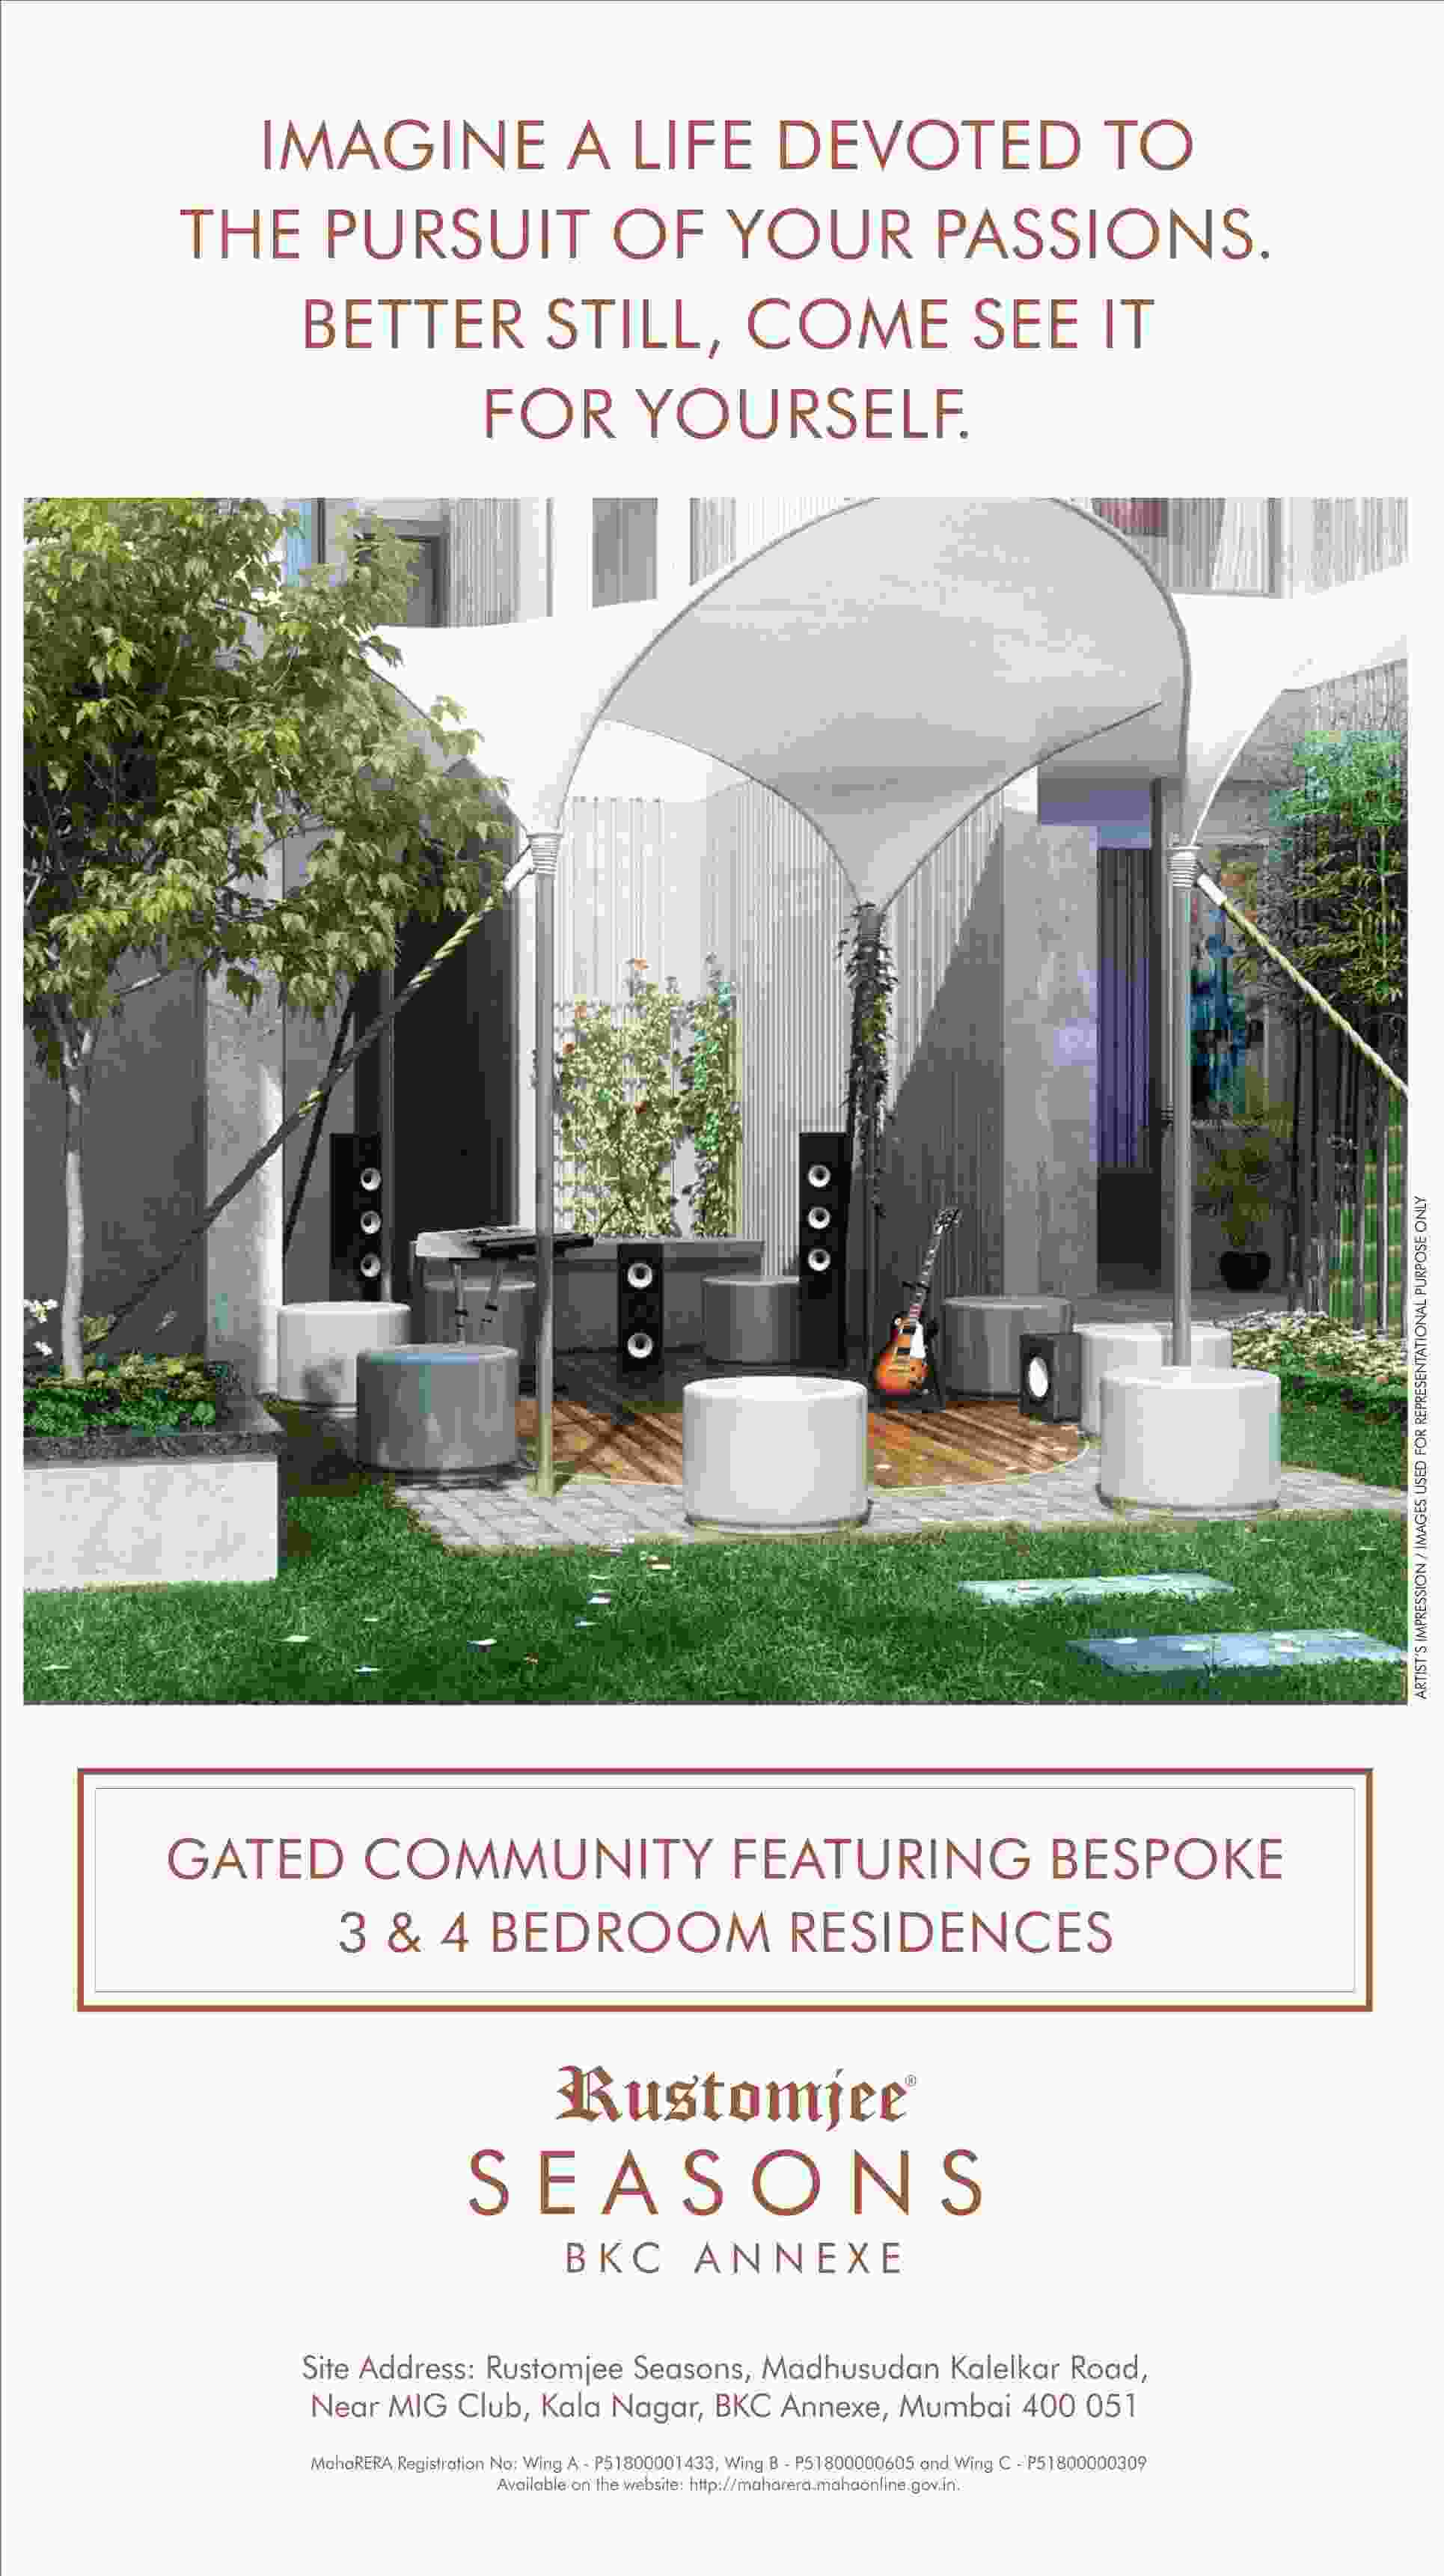 Gated community featuring bespoke 3 & 4 residences at Rustomjee Seasons in Mumbai Update